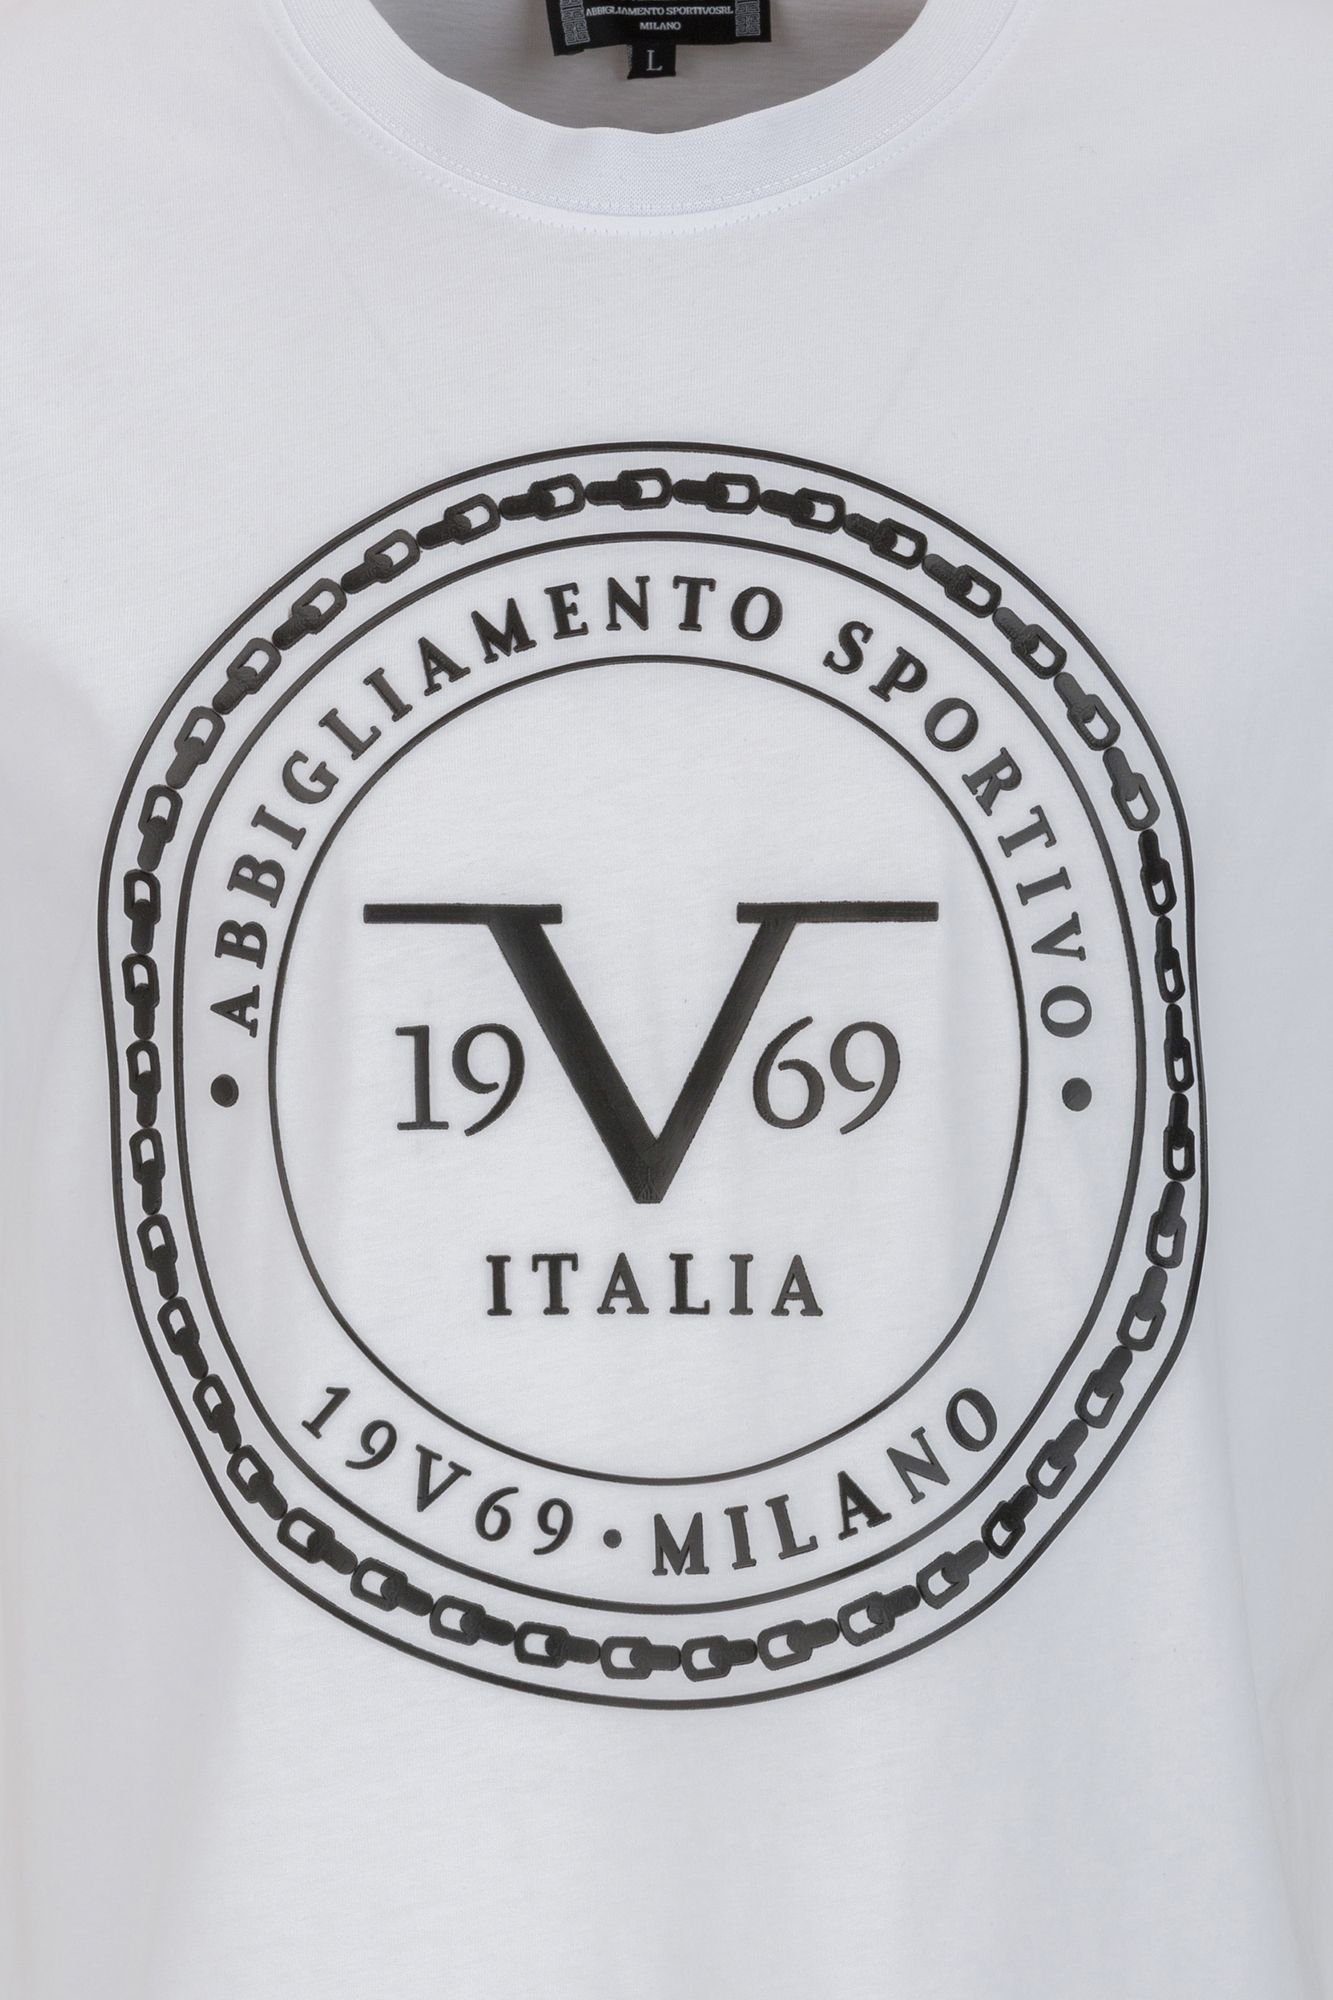 Versace Italia T-Shirt Felix WHITE 19V69 by